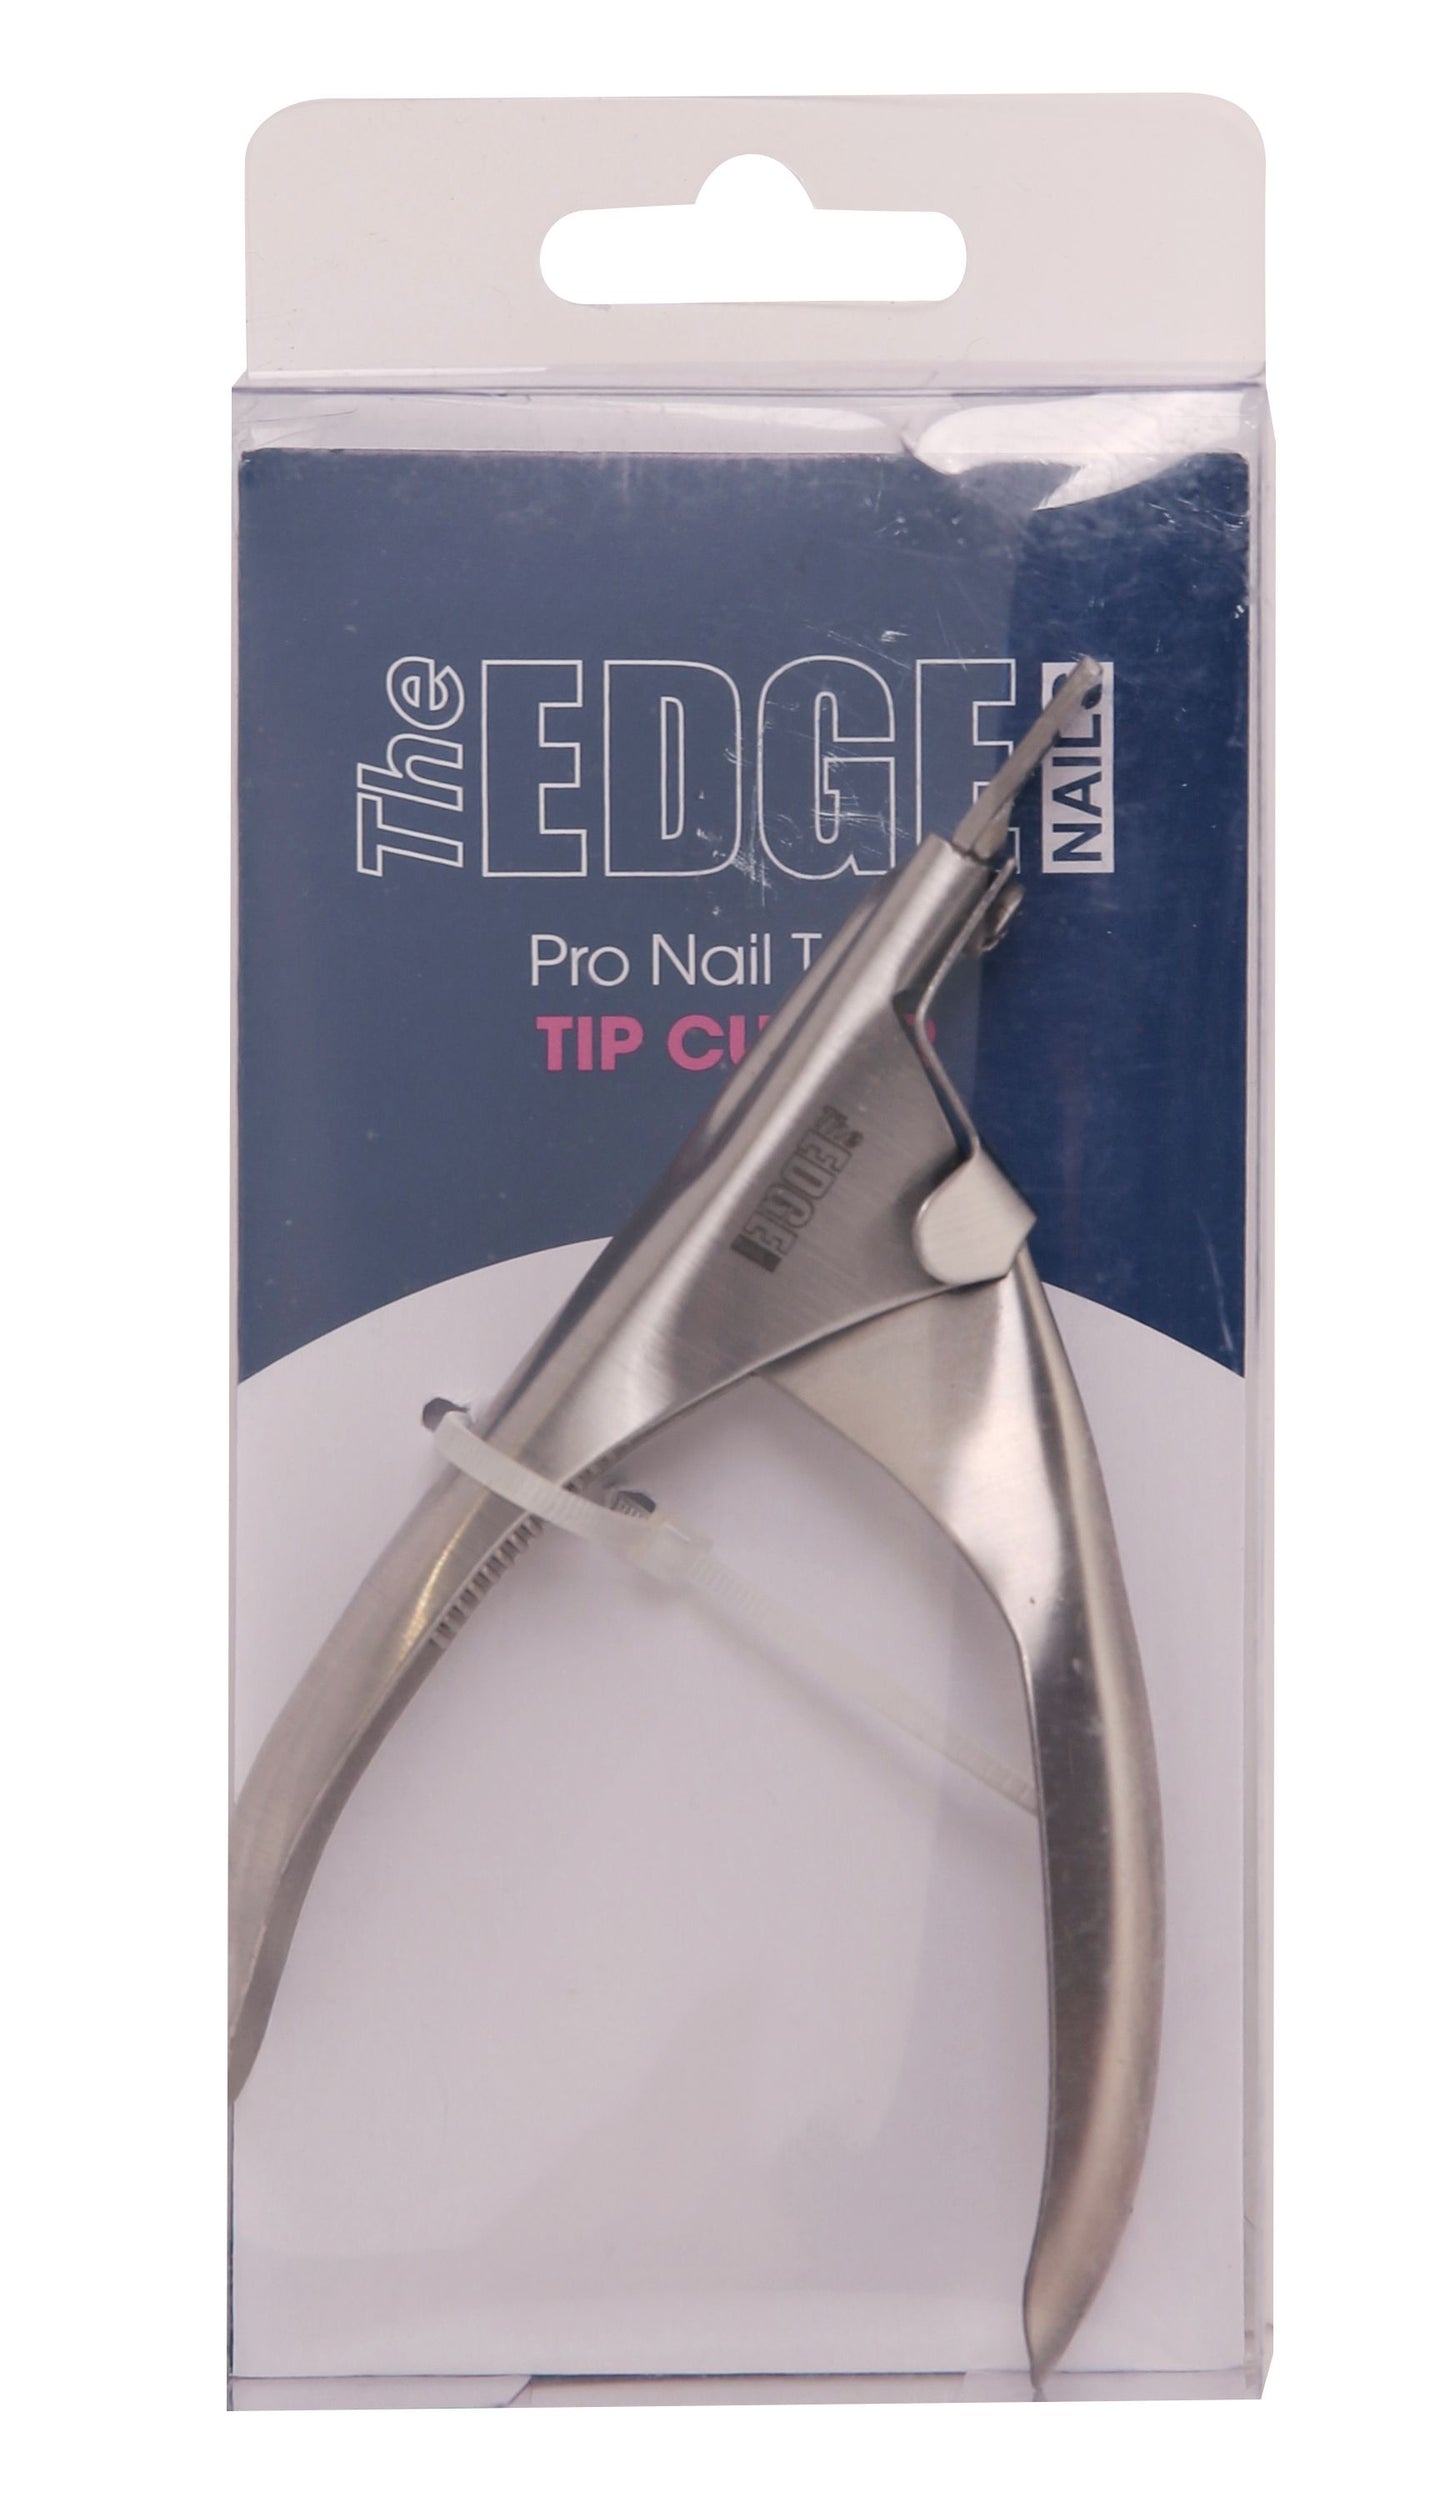 The Edge Silver Tip Cutter